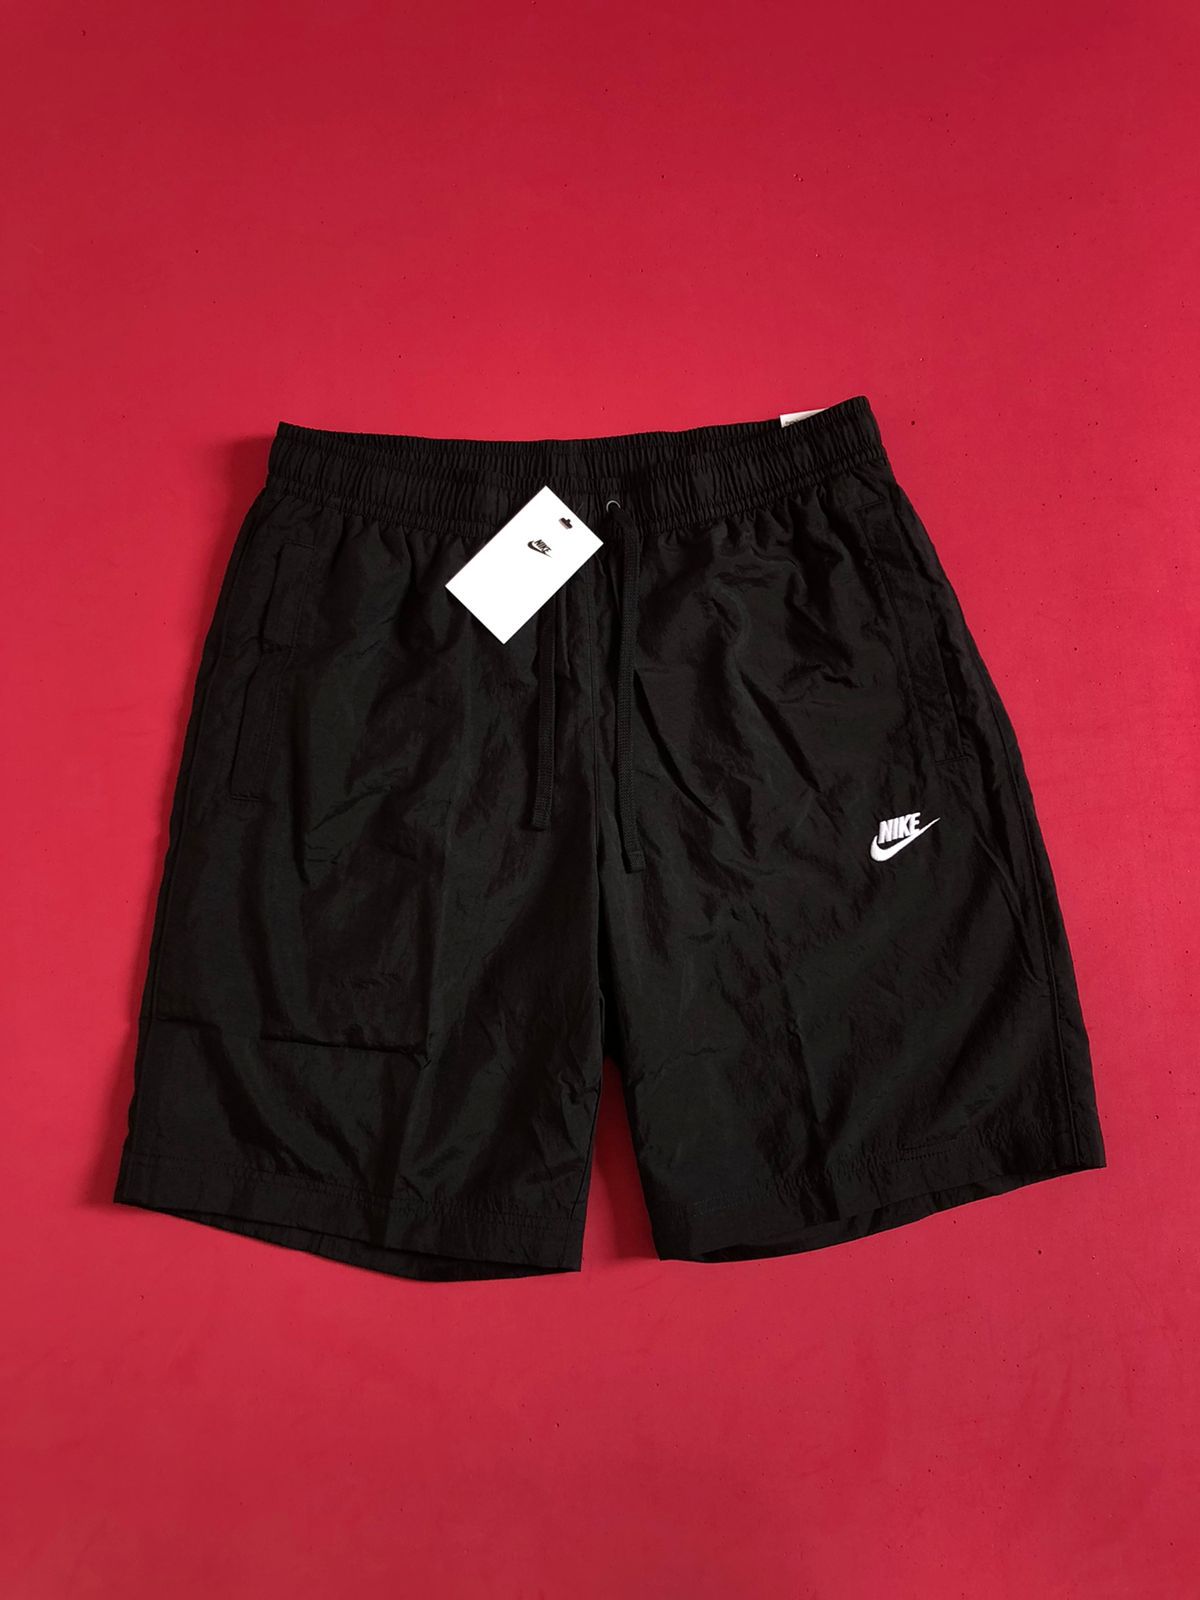 Shorts Nike Sportswear Track Preto Masculino - GNB Store